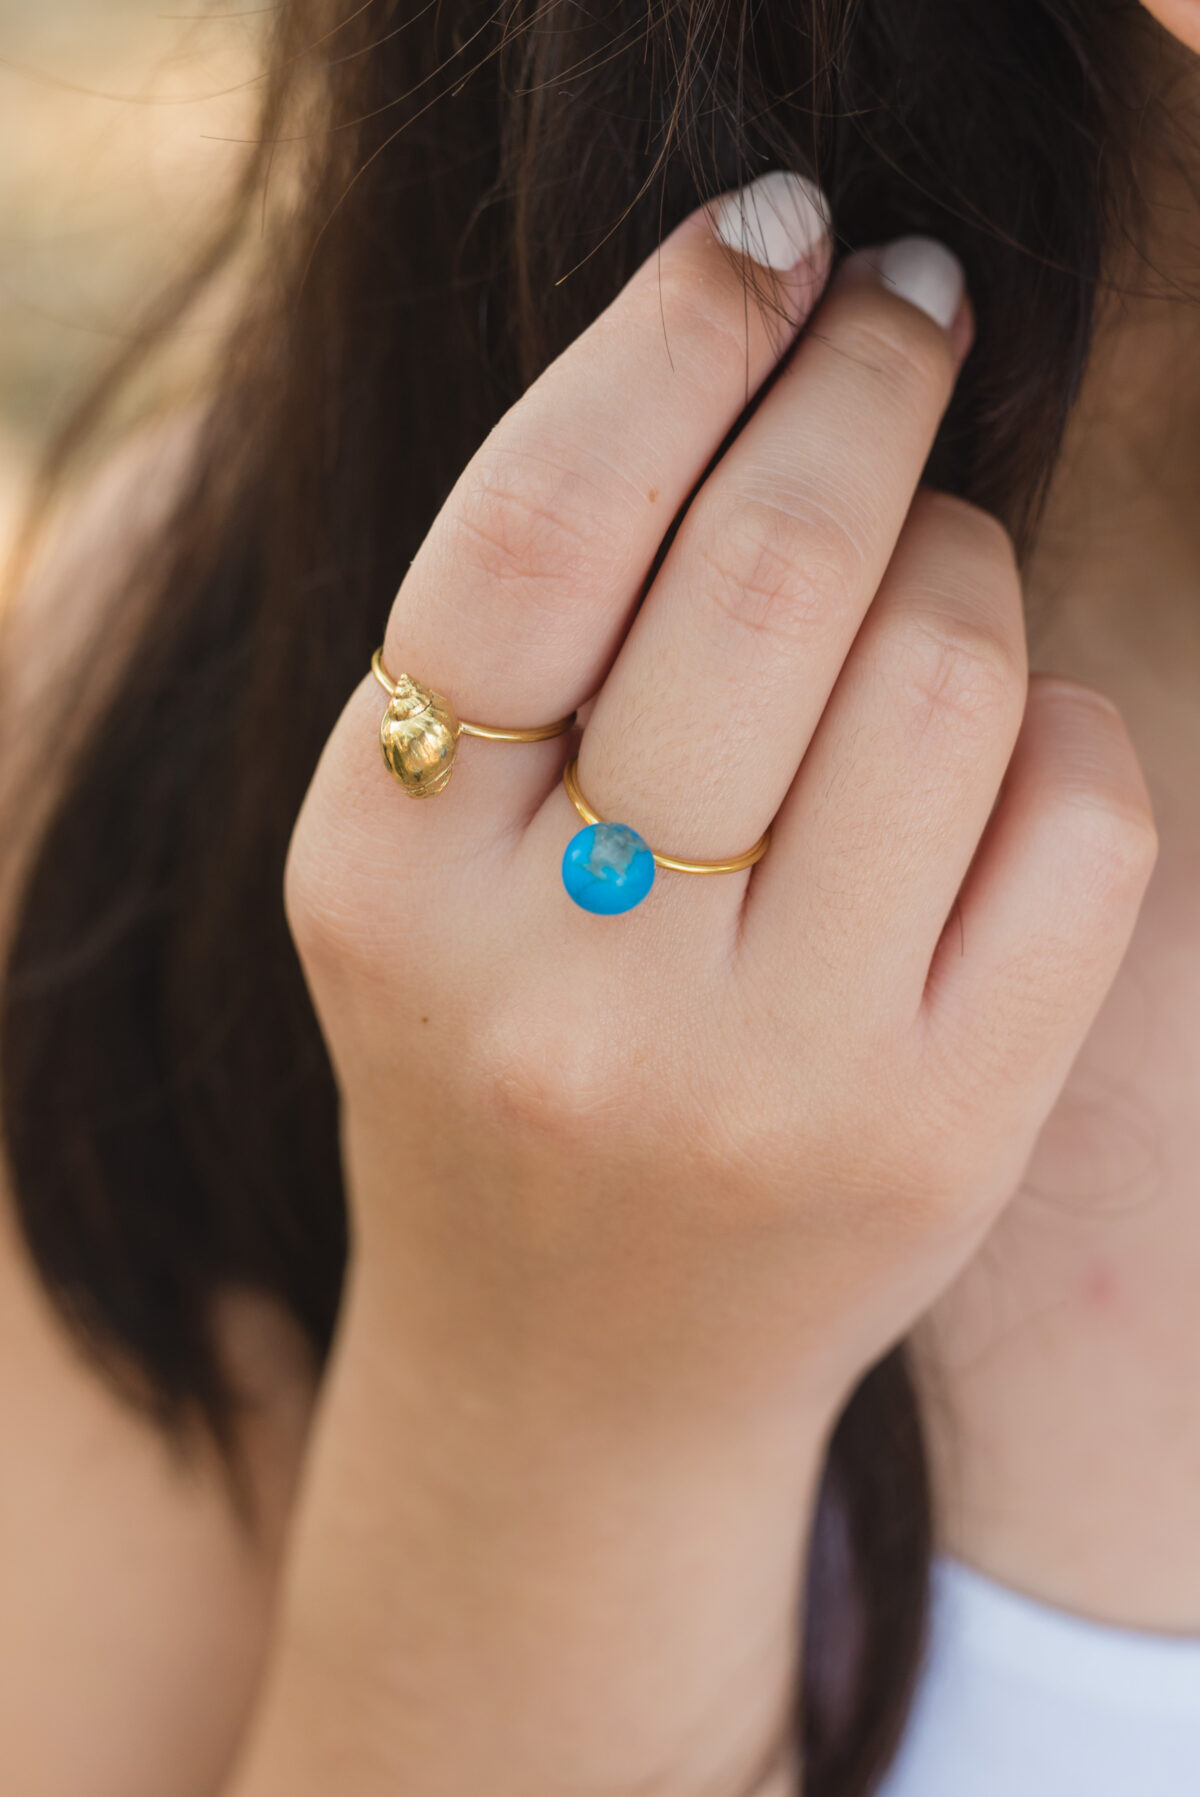 “Ocean treasure” επίχρυσο δαχτυλίδι “Ocean treasure” επίχρυσο δαχτυλίδι “Ocean treasure” επίχρυσο δαχτυλίδι 6